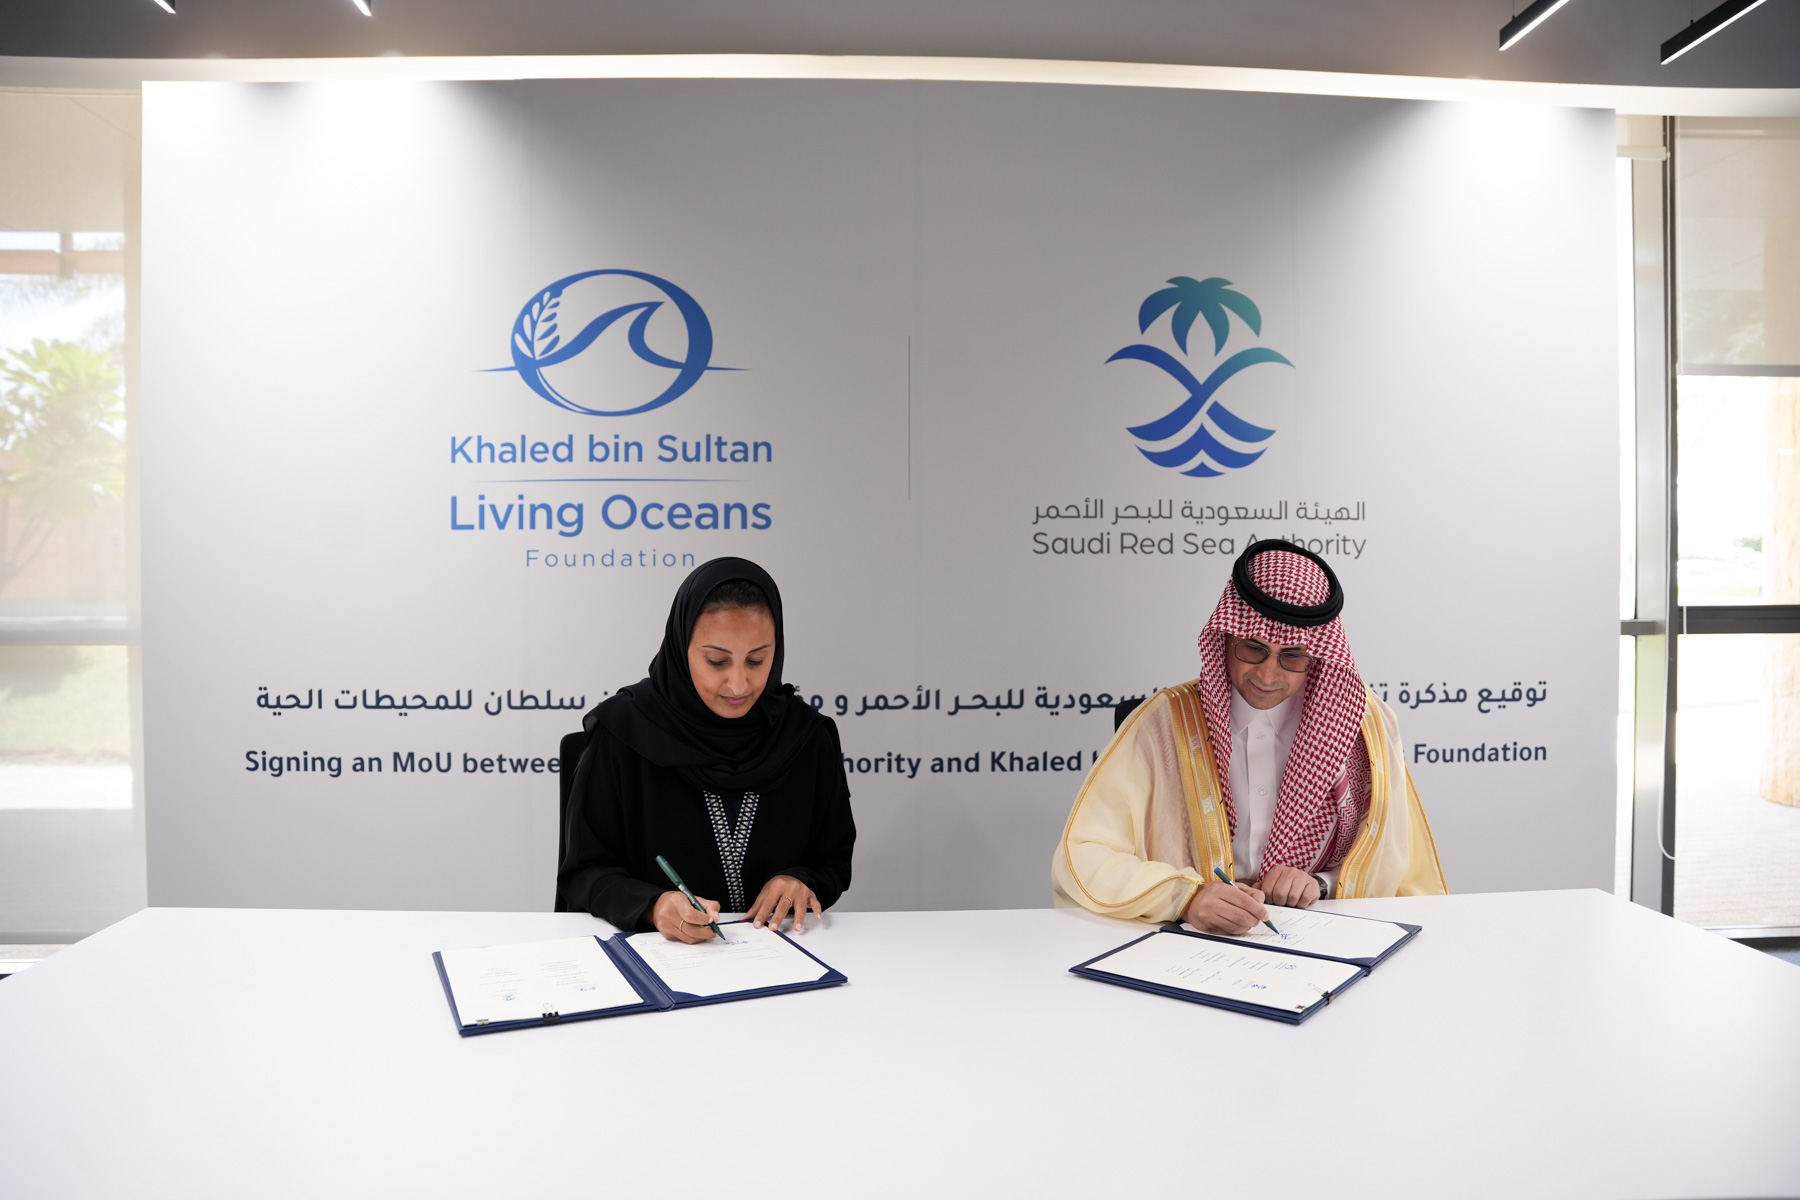 HRH Princess Hala and Mr. Mohammed Al-Nasser sign the MoU between SRSA and the Living Oceans Foundation.